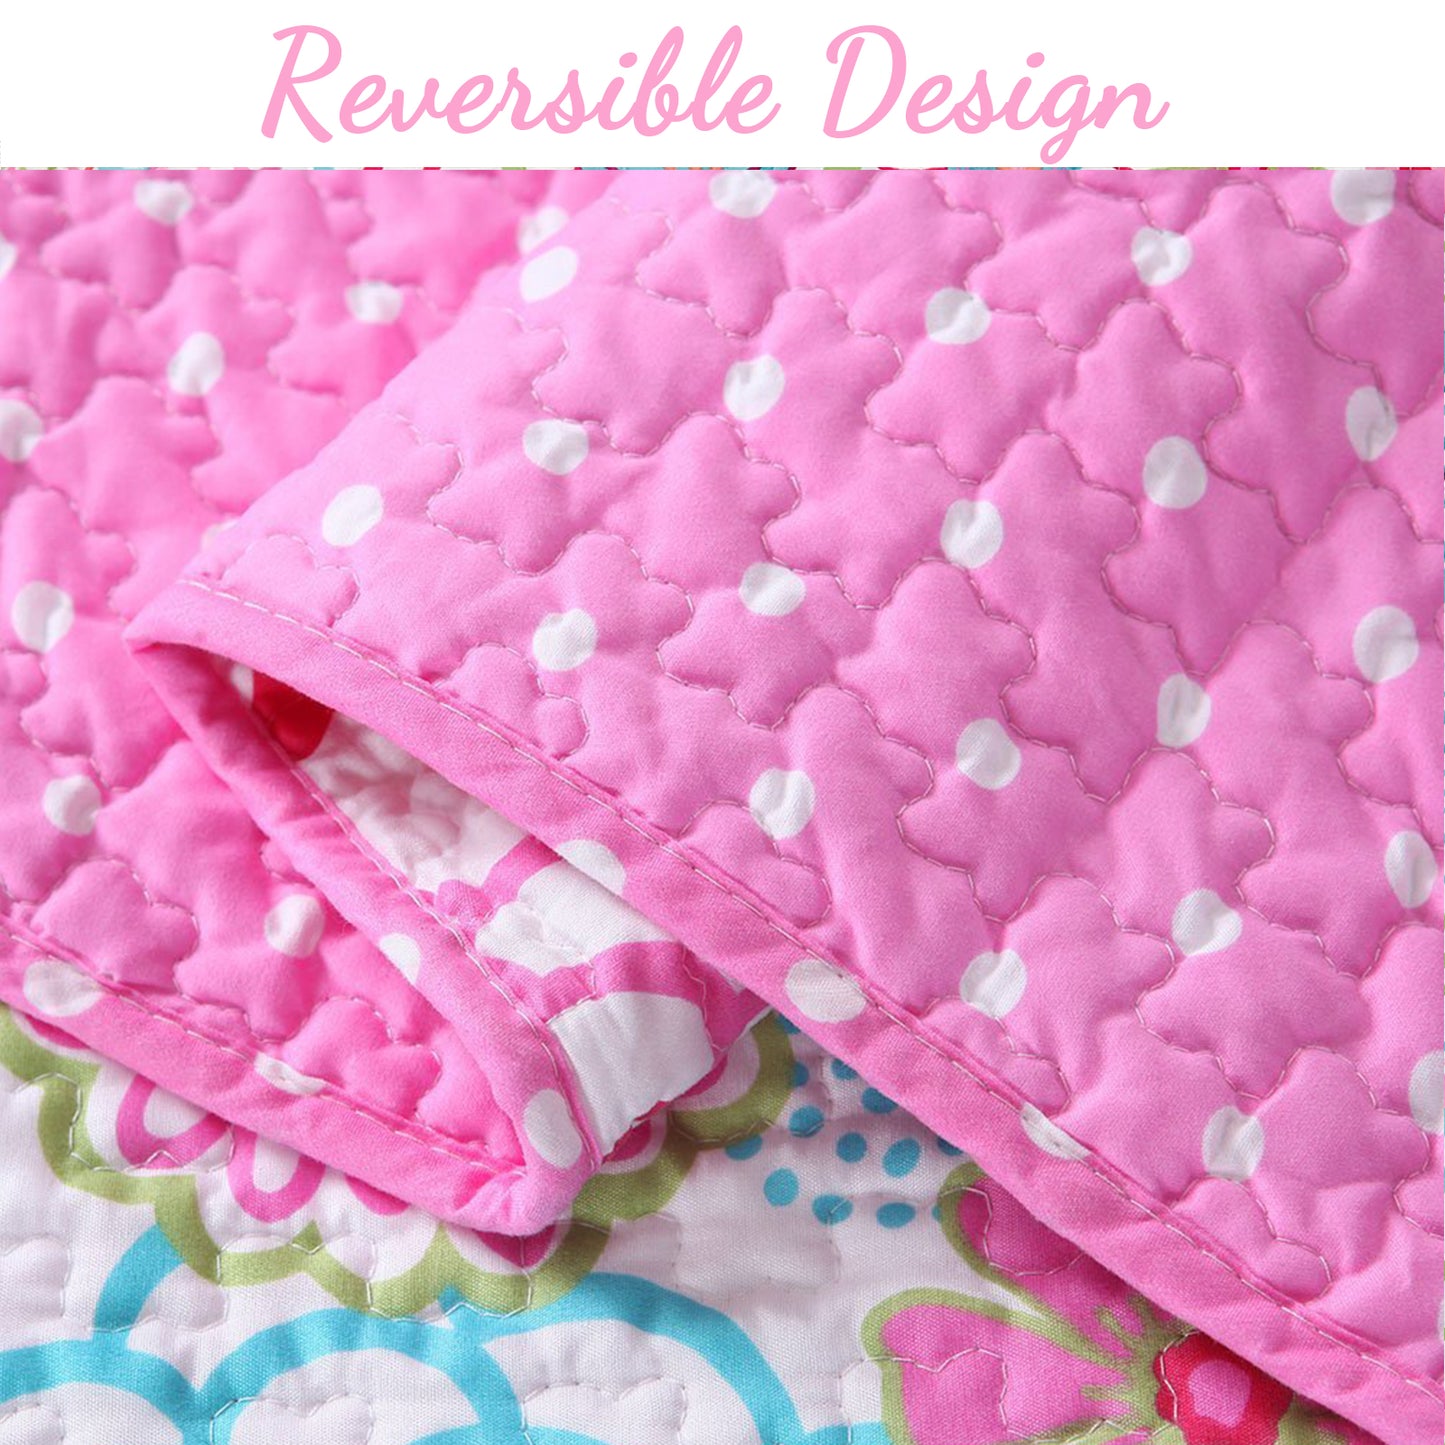 Mariah Pink Floral Dot Cotton Reversible Quilt Bedding Set